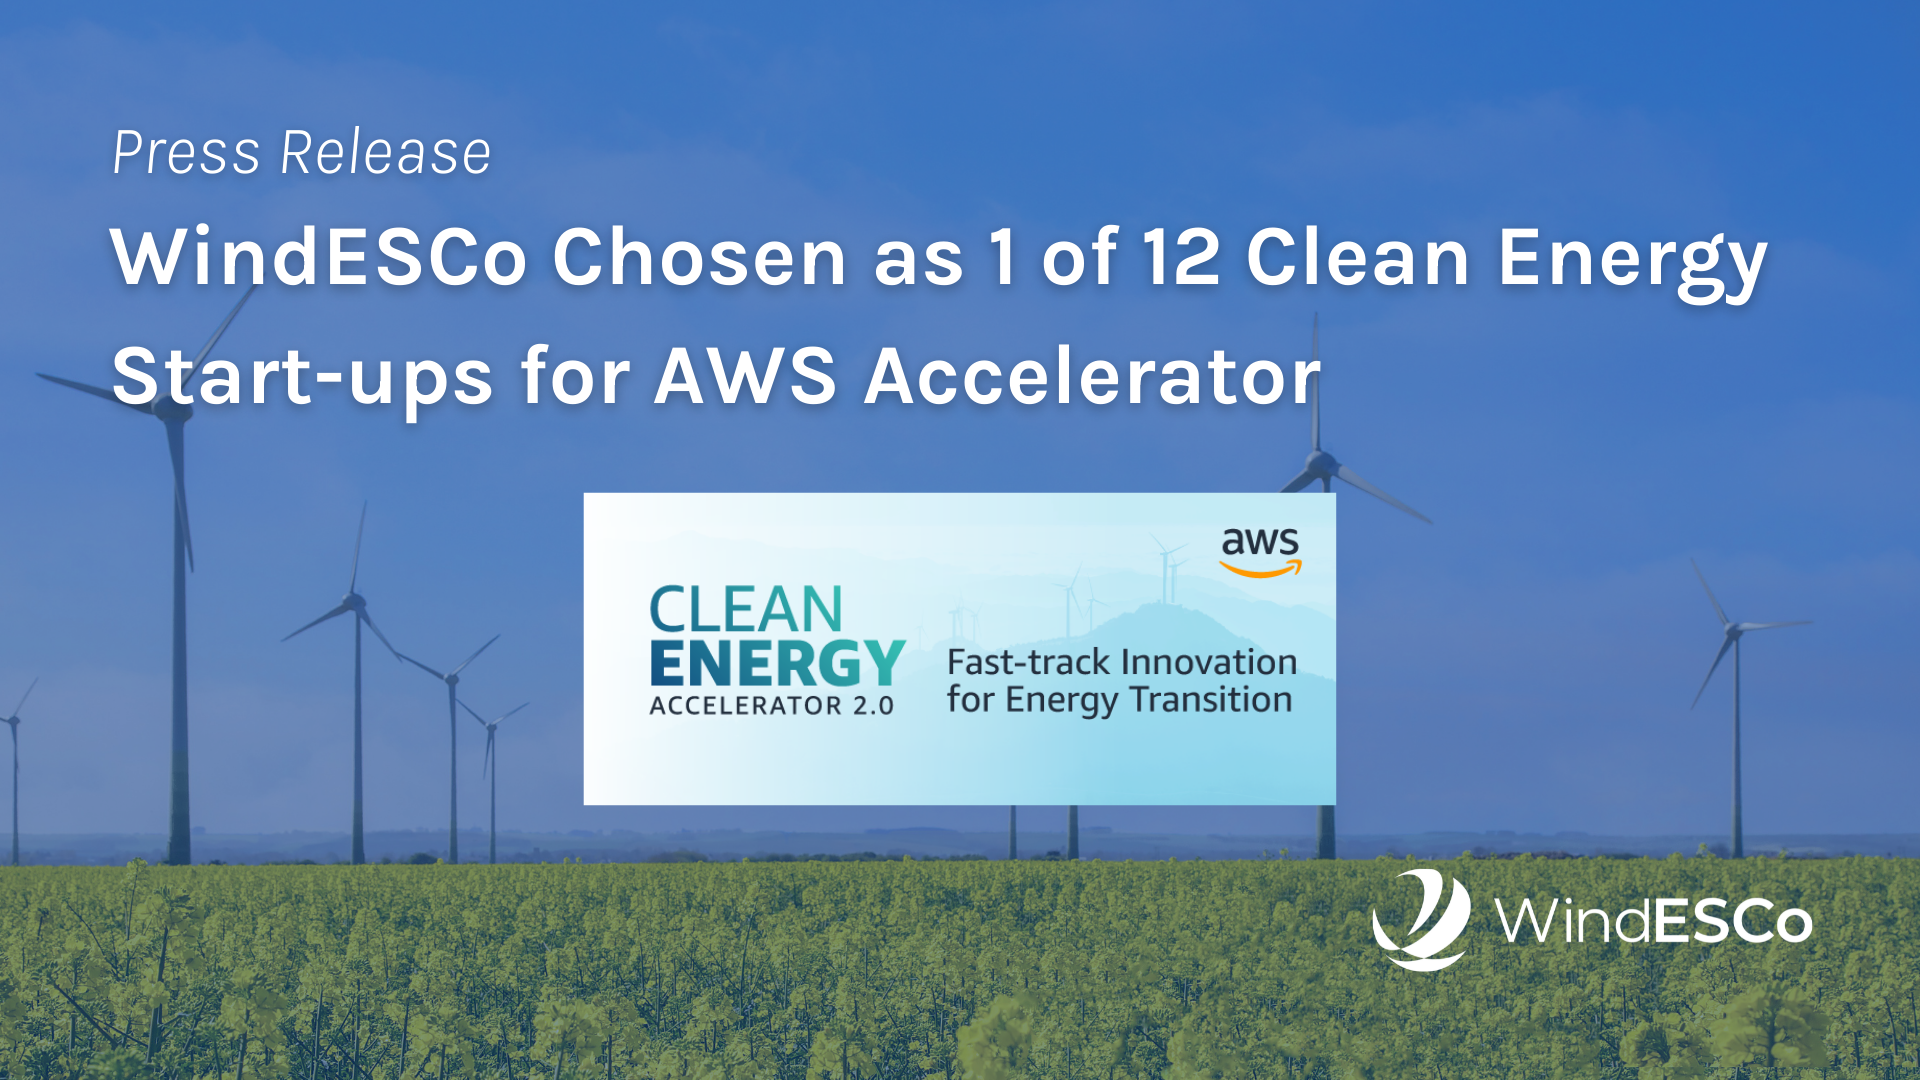 WindESCo Chosen as 1 of 12 Clean Energy Start-Ups for AWS Accelerator